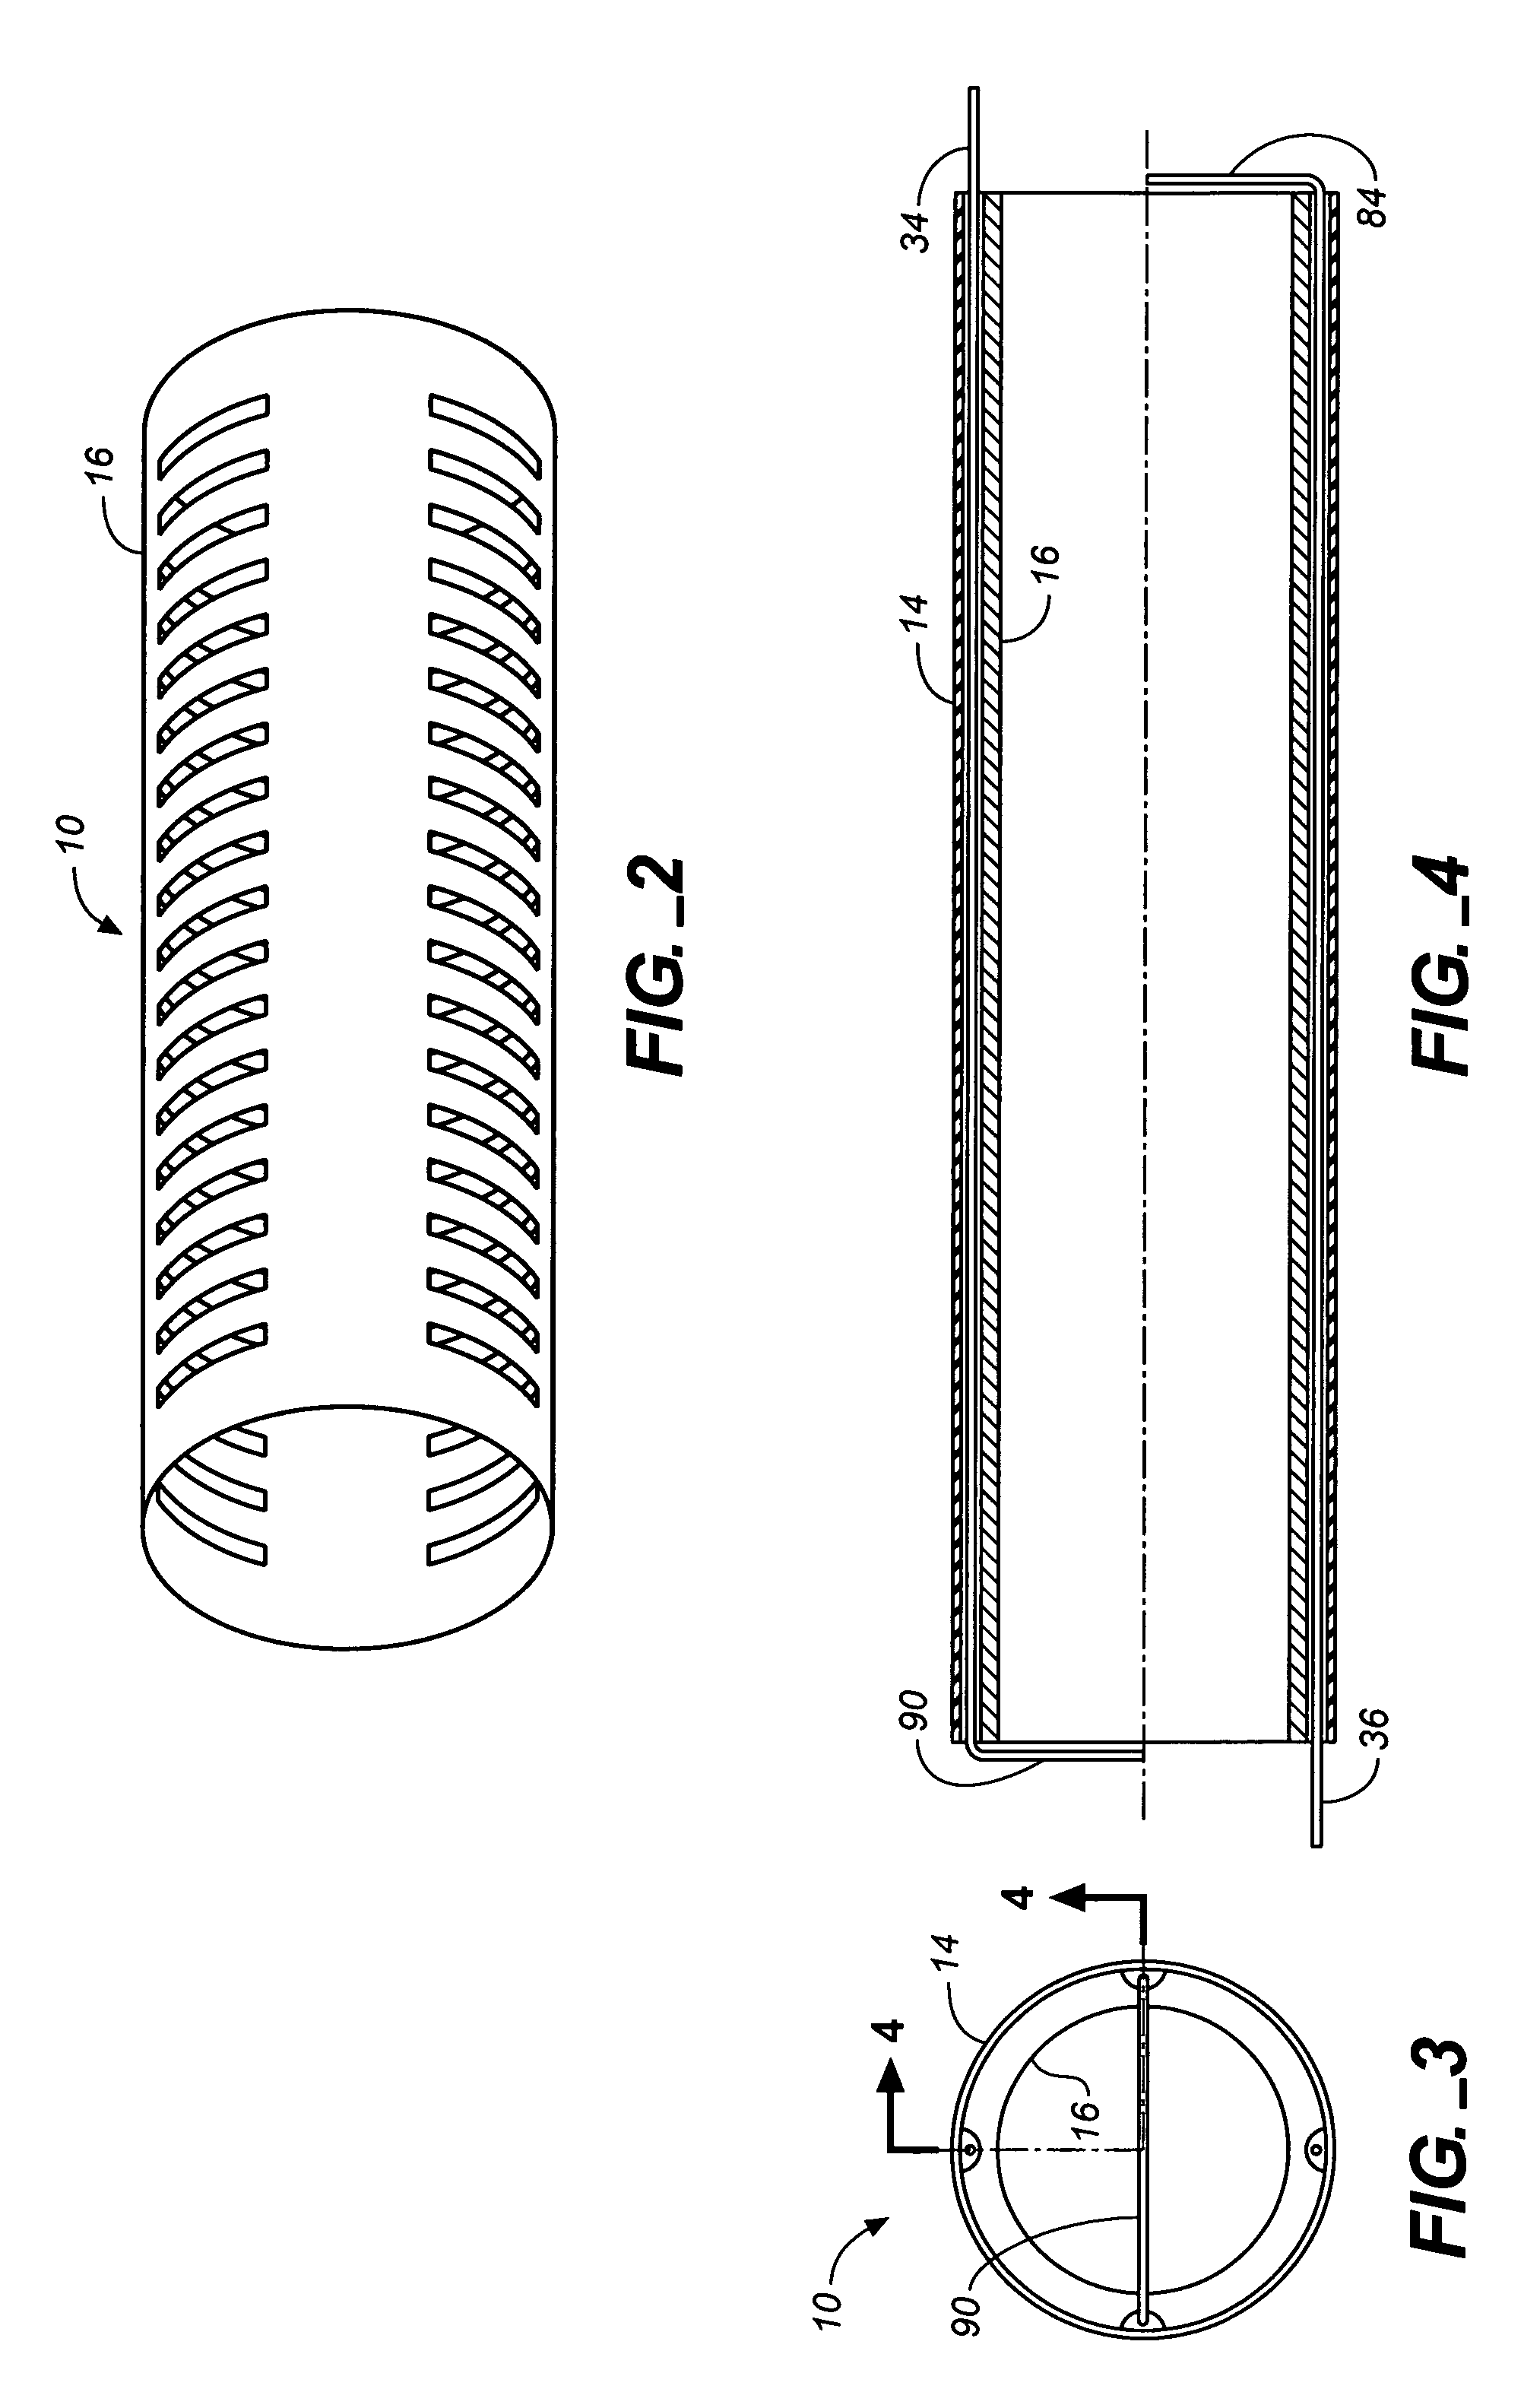 Zinc-air battery control valve